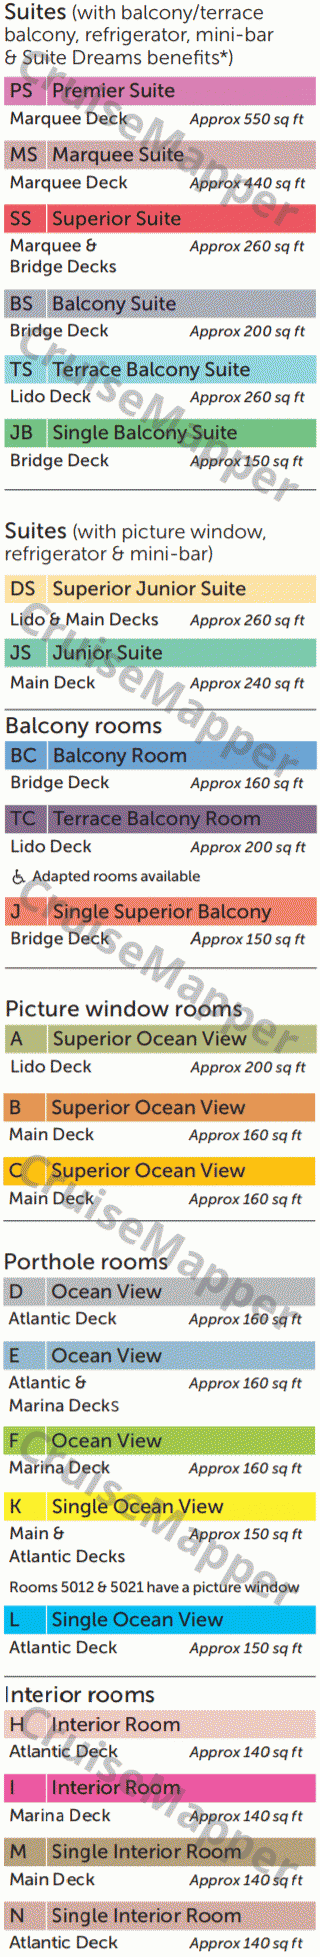 Boudicca deck 4 plan (Atlantic-Cabins) legend